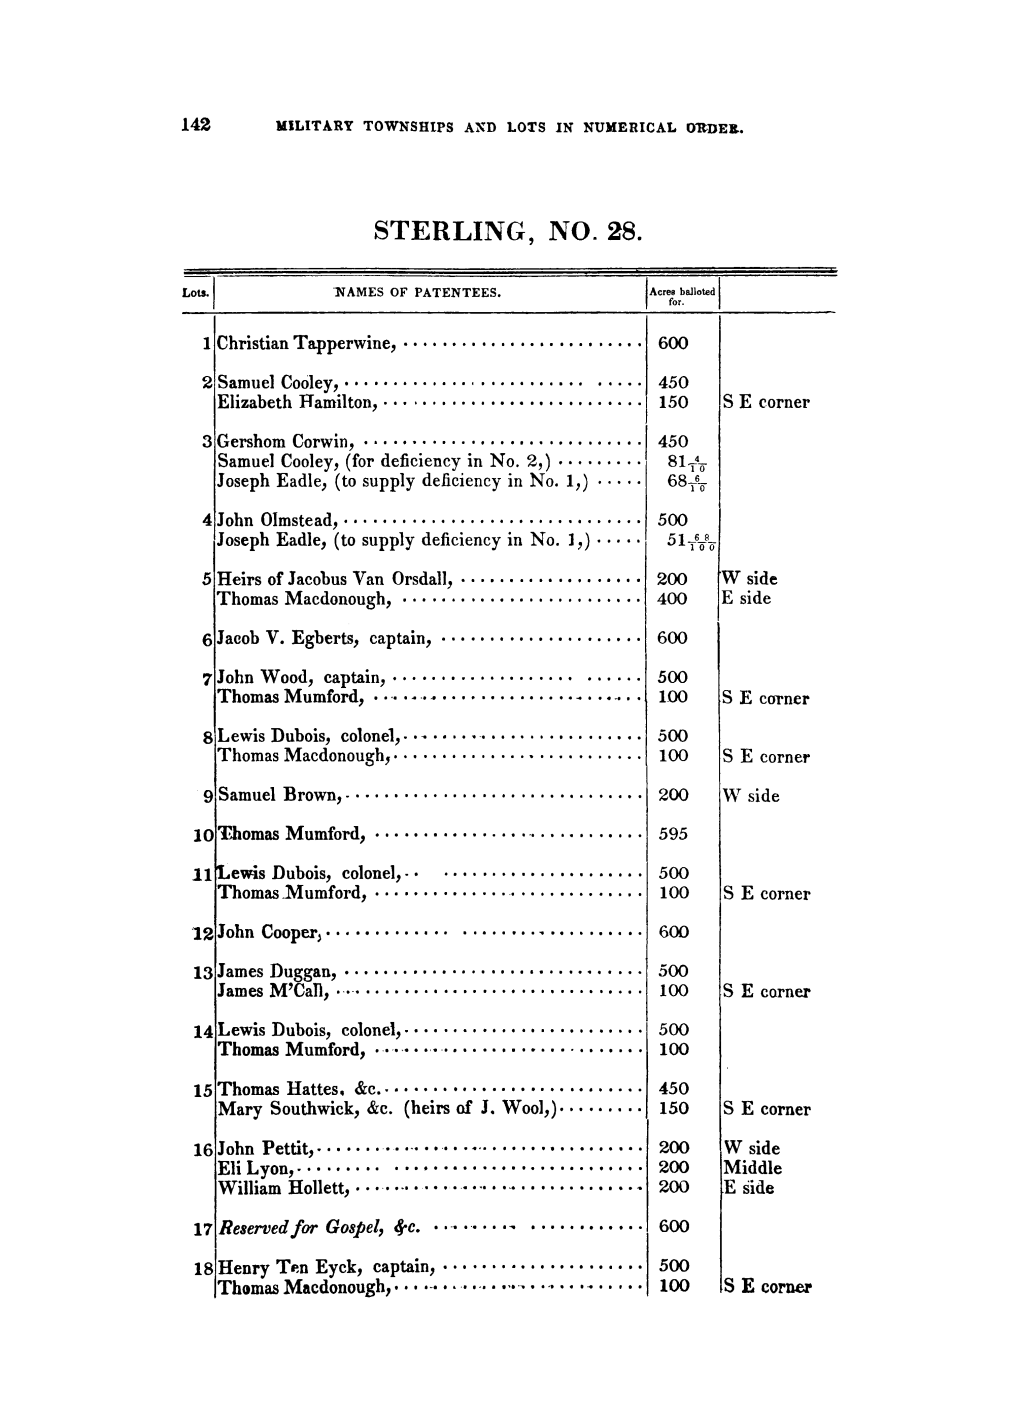 Sterling, No. 28